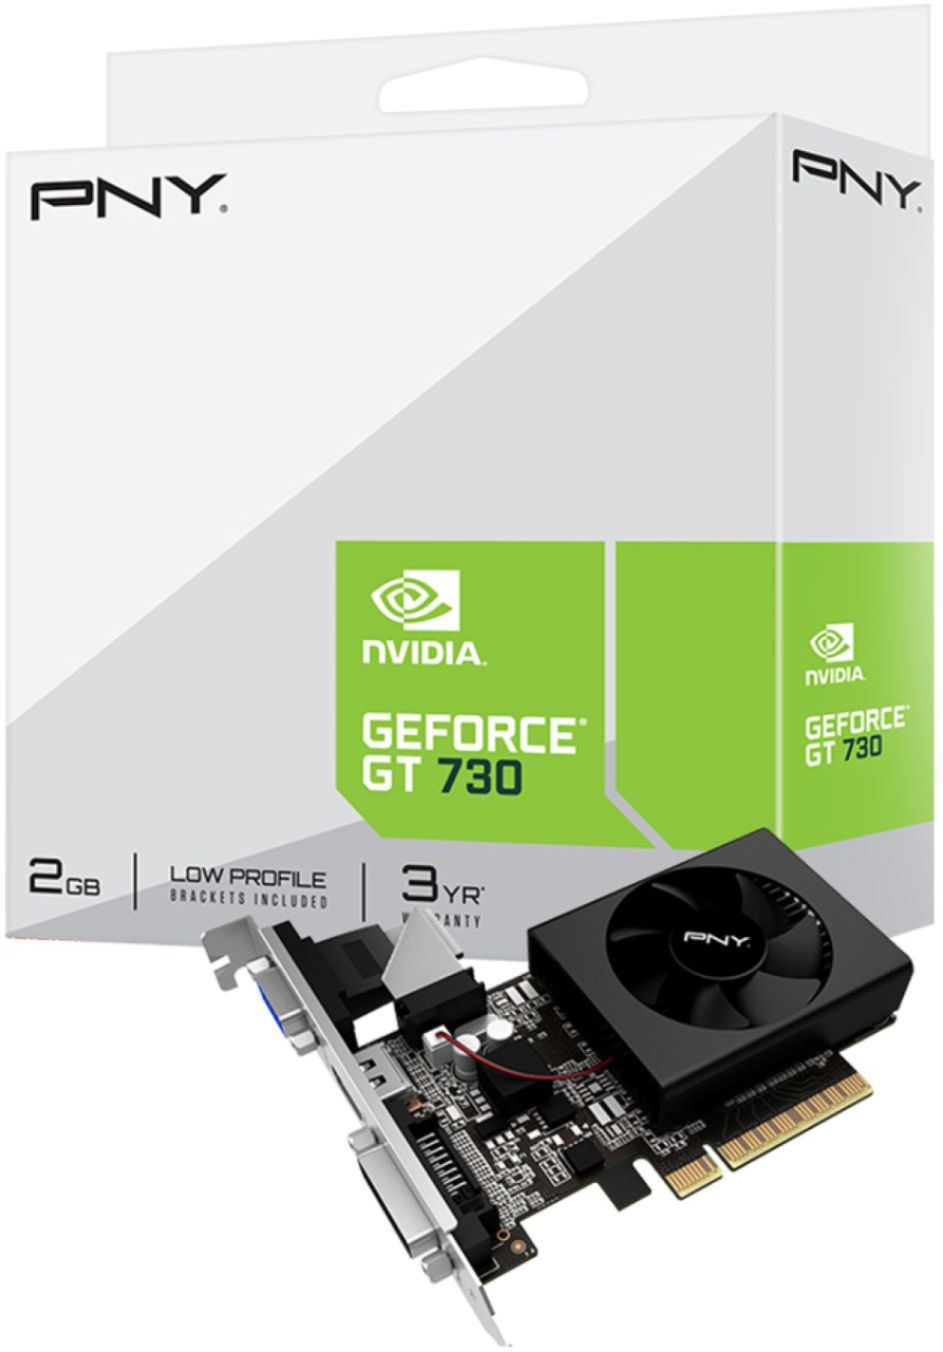  PNY - NVIDIA GeForce GT 730 2GB DDR3 Single Fan Graphics Card - Black